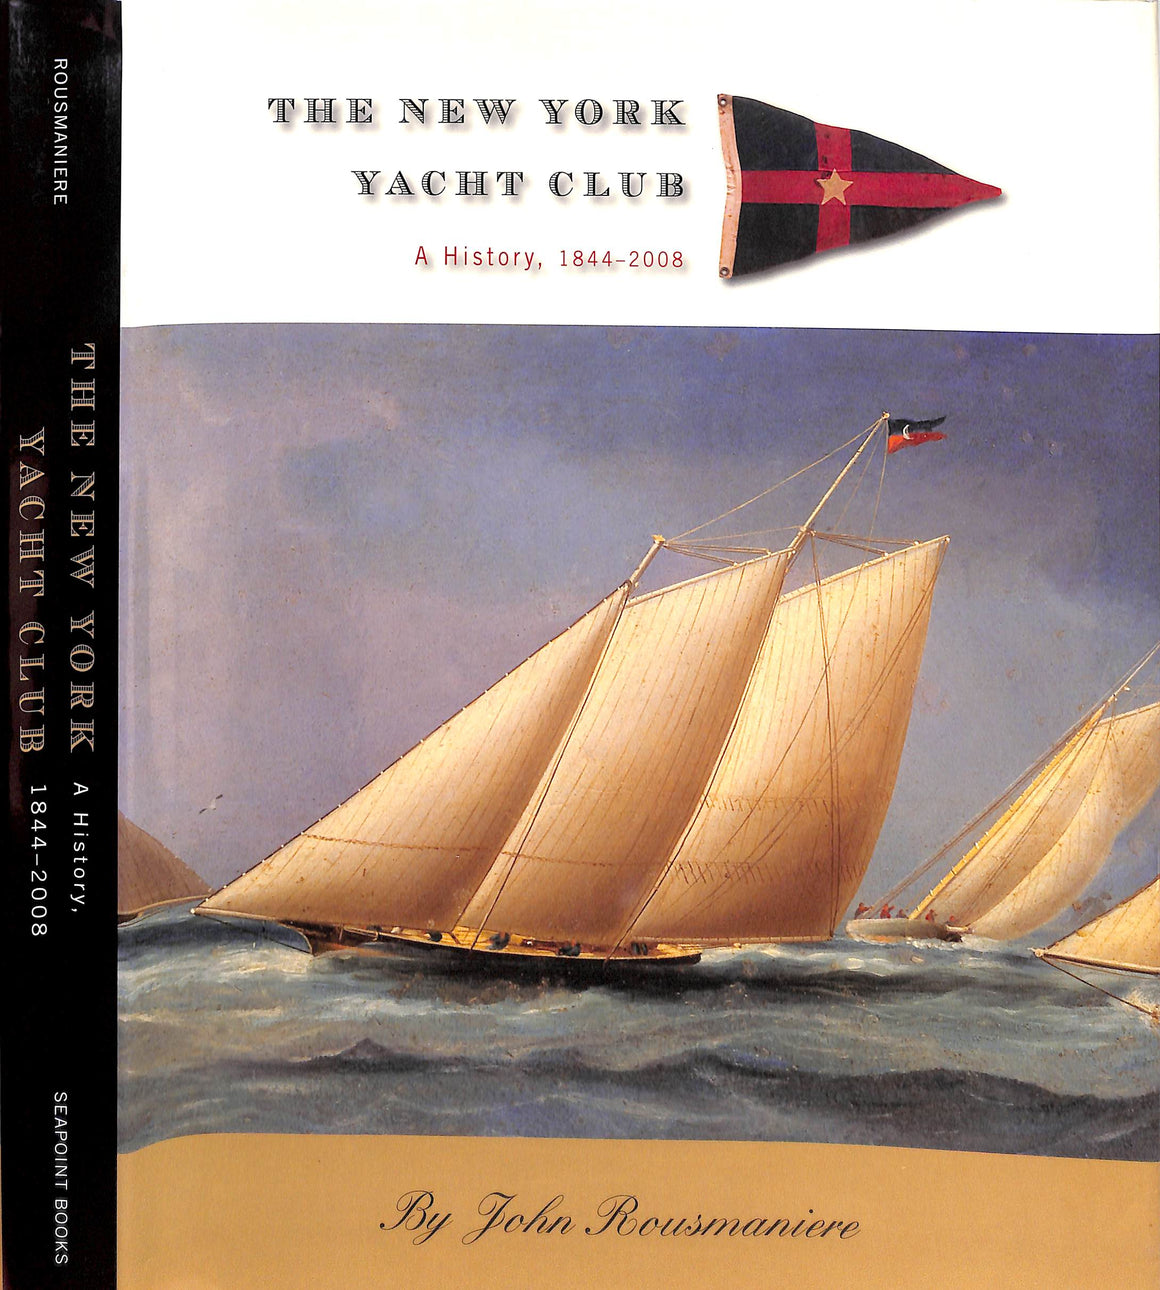 "The New York Yacht Club: A History, 1844-2008" 2009 ROUSMANIERE, John (SOLD)